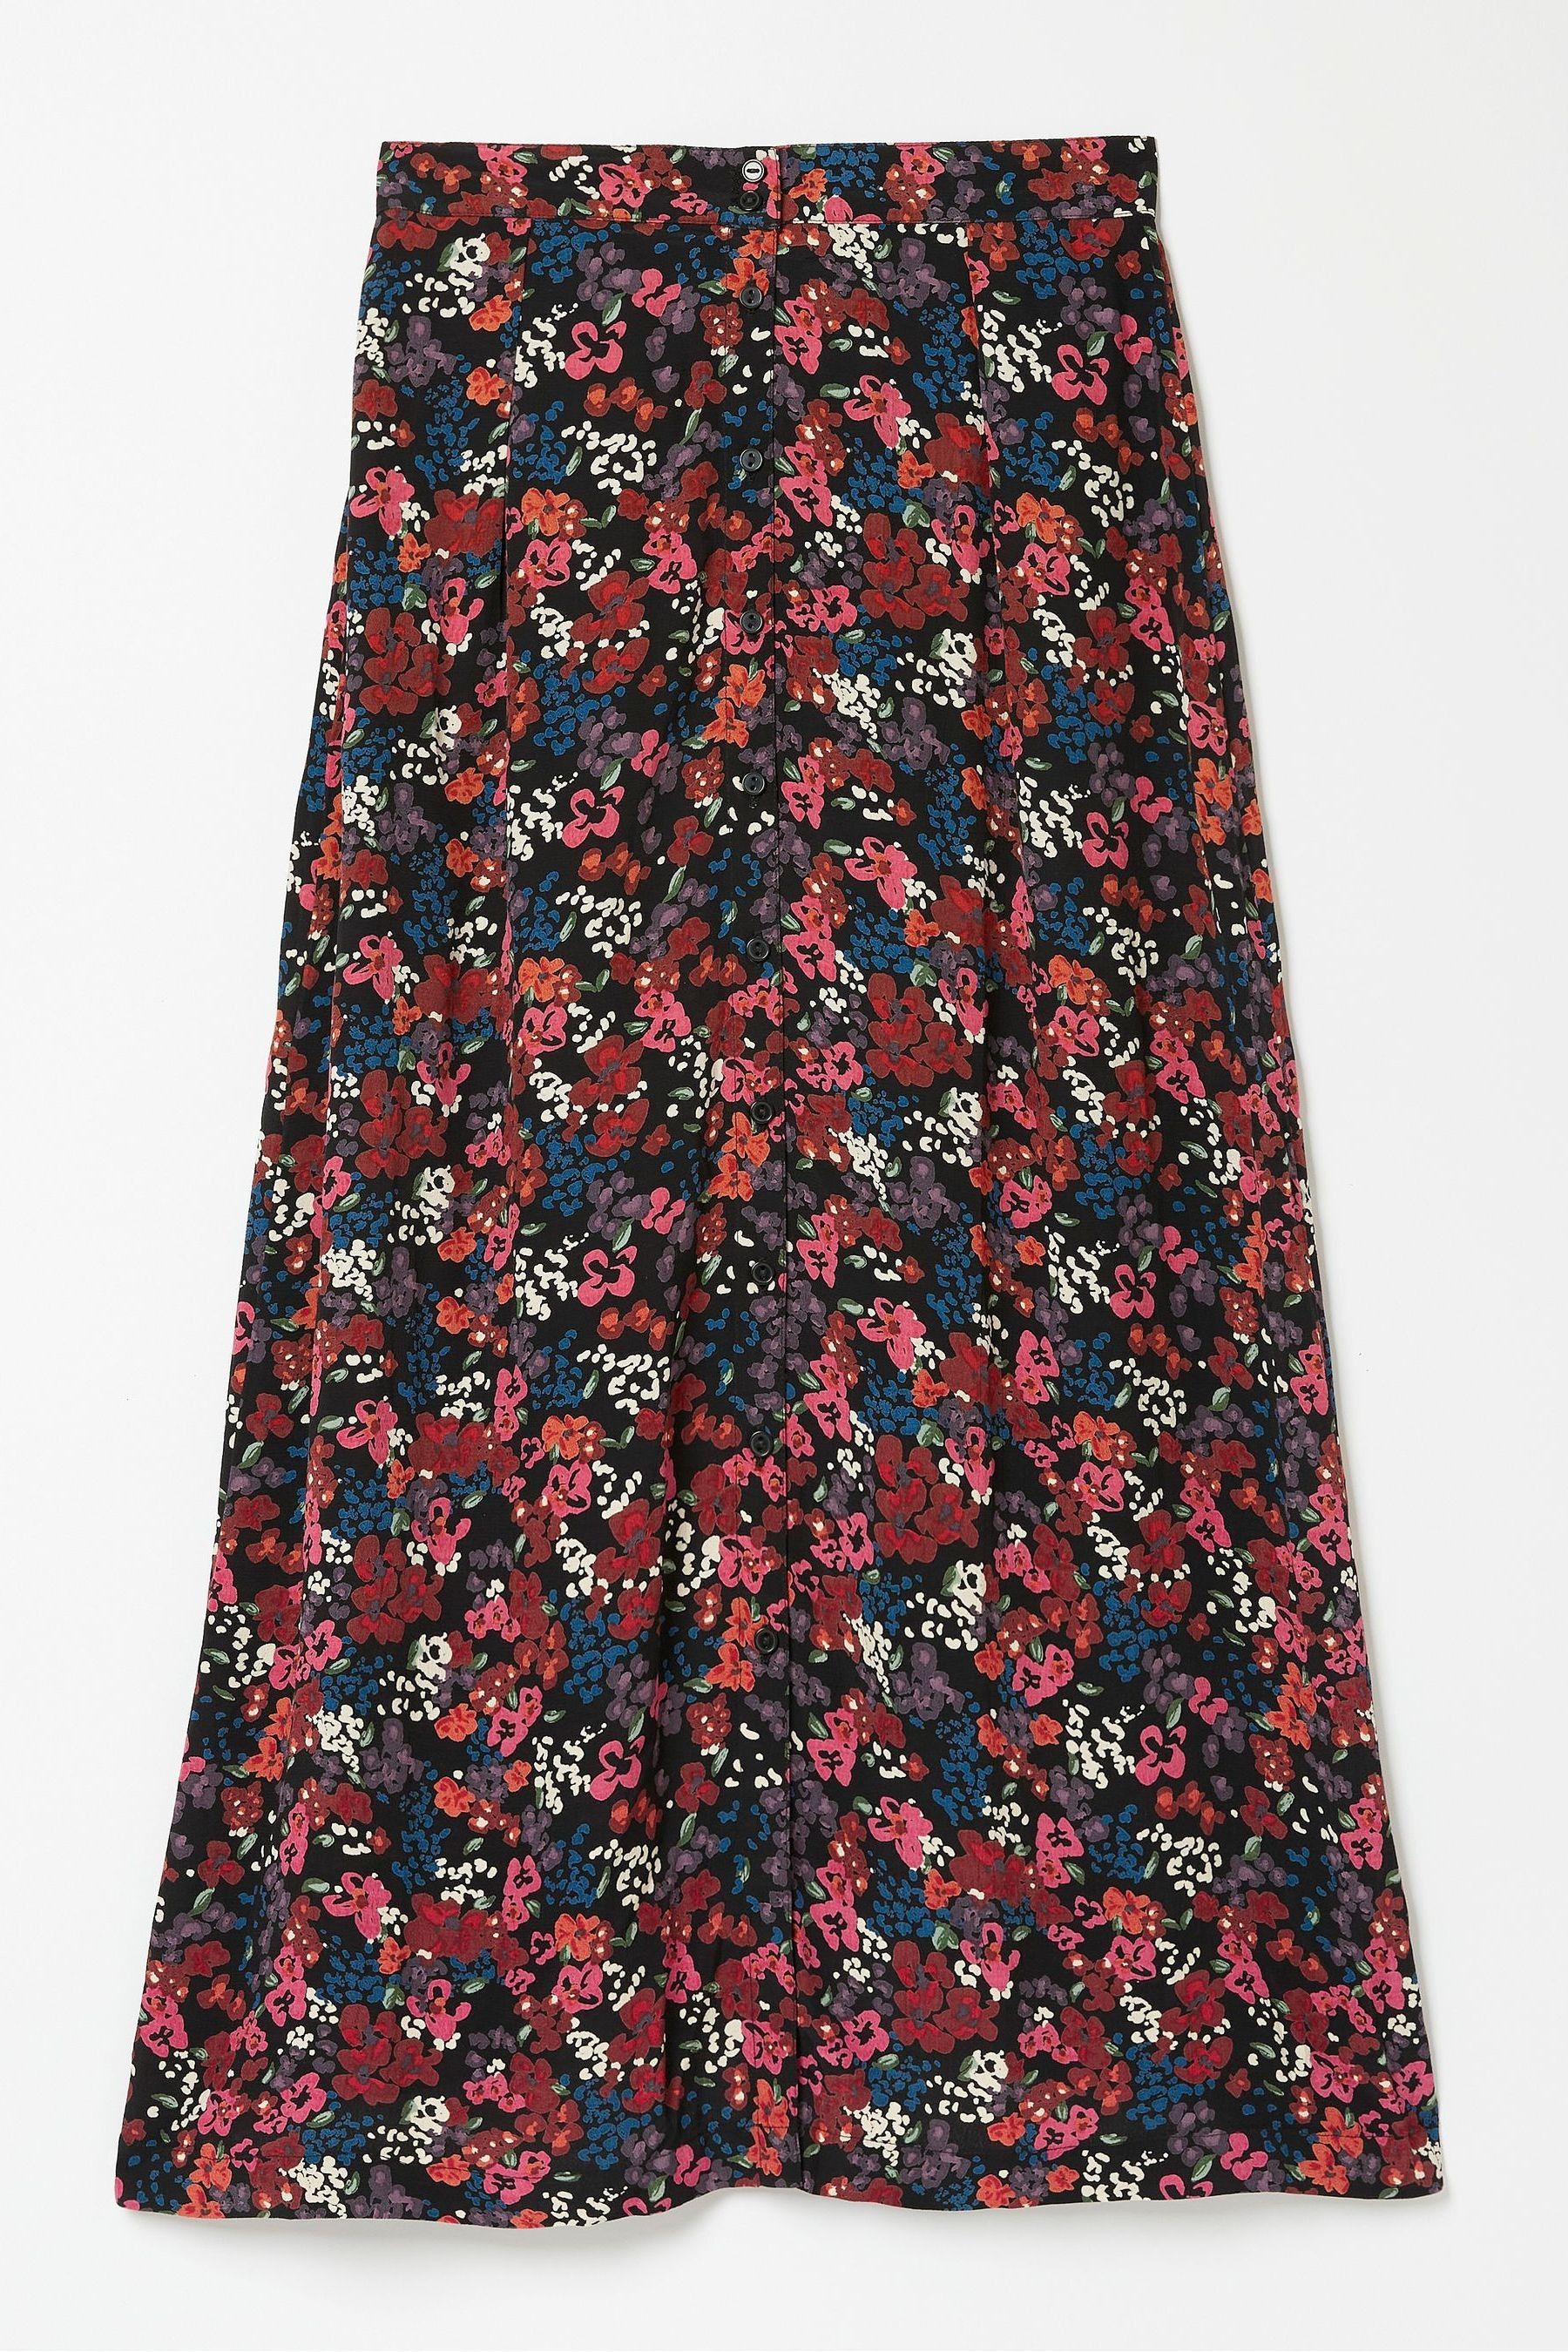 Buy FatFace Hayward Jewel Bloom Midi Skirt from Next Ireland